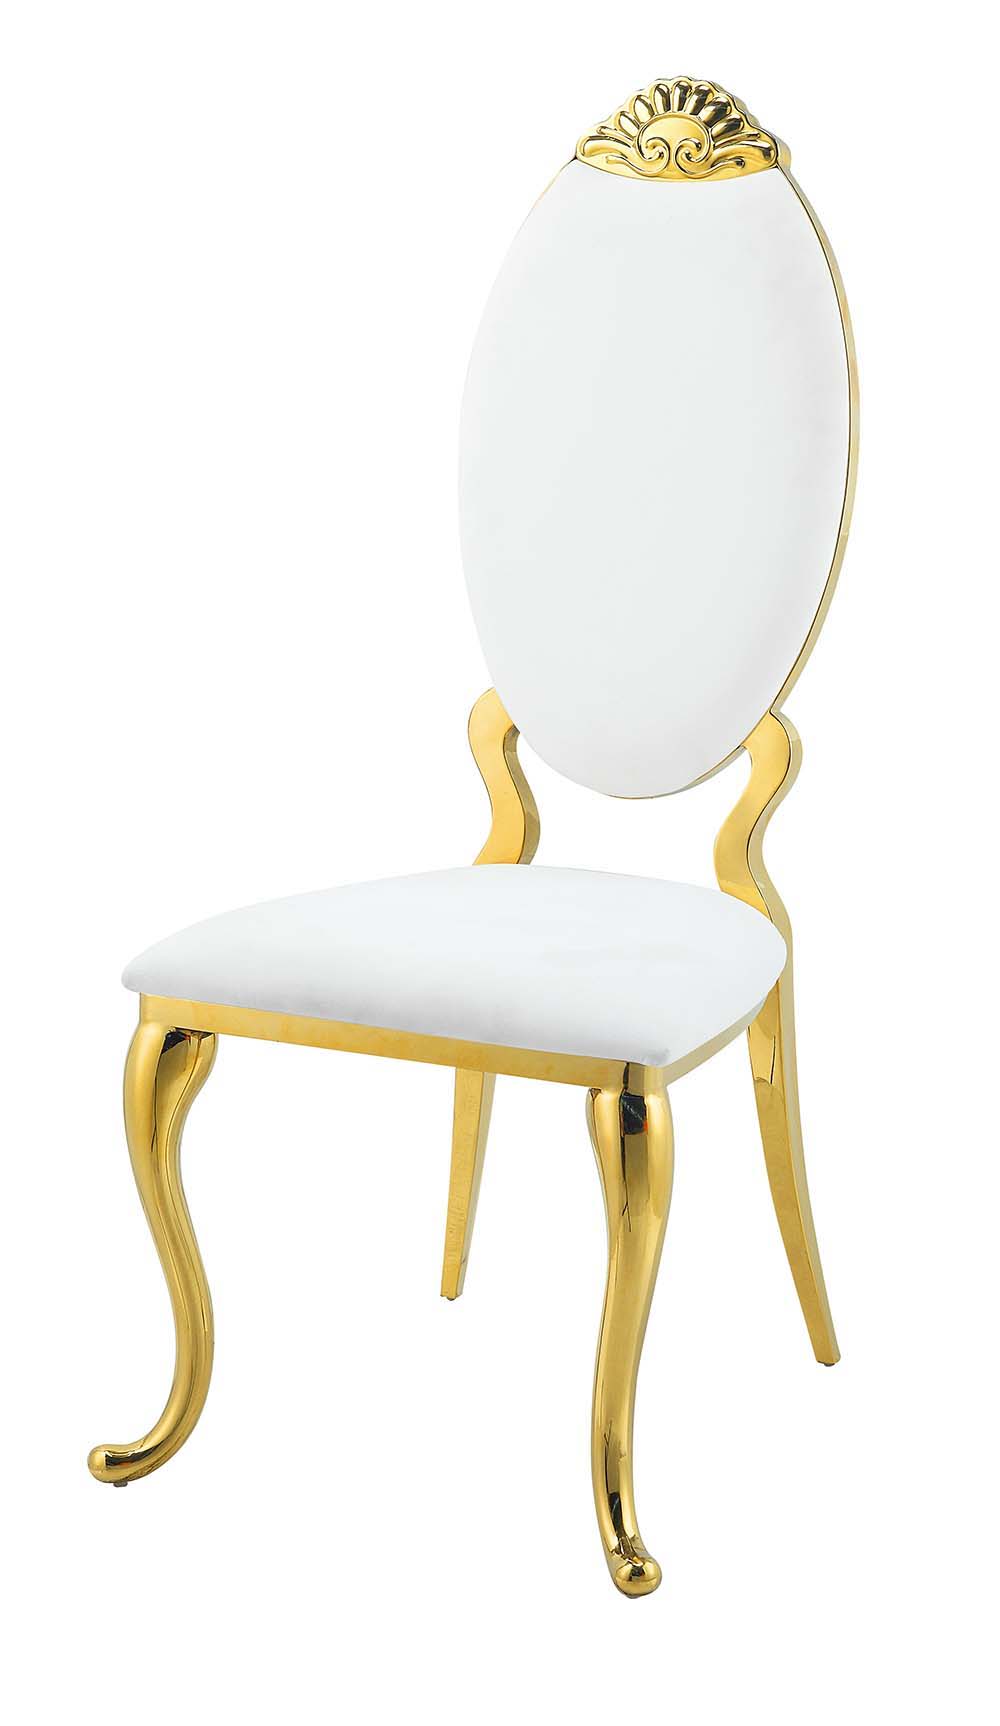 Fallon - Side Chair (Set of 2) - White PU & Mirroed Gold Finish - Tony's Home Furnishings